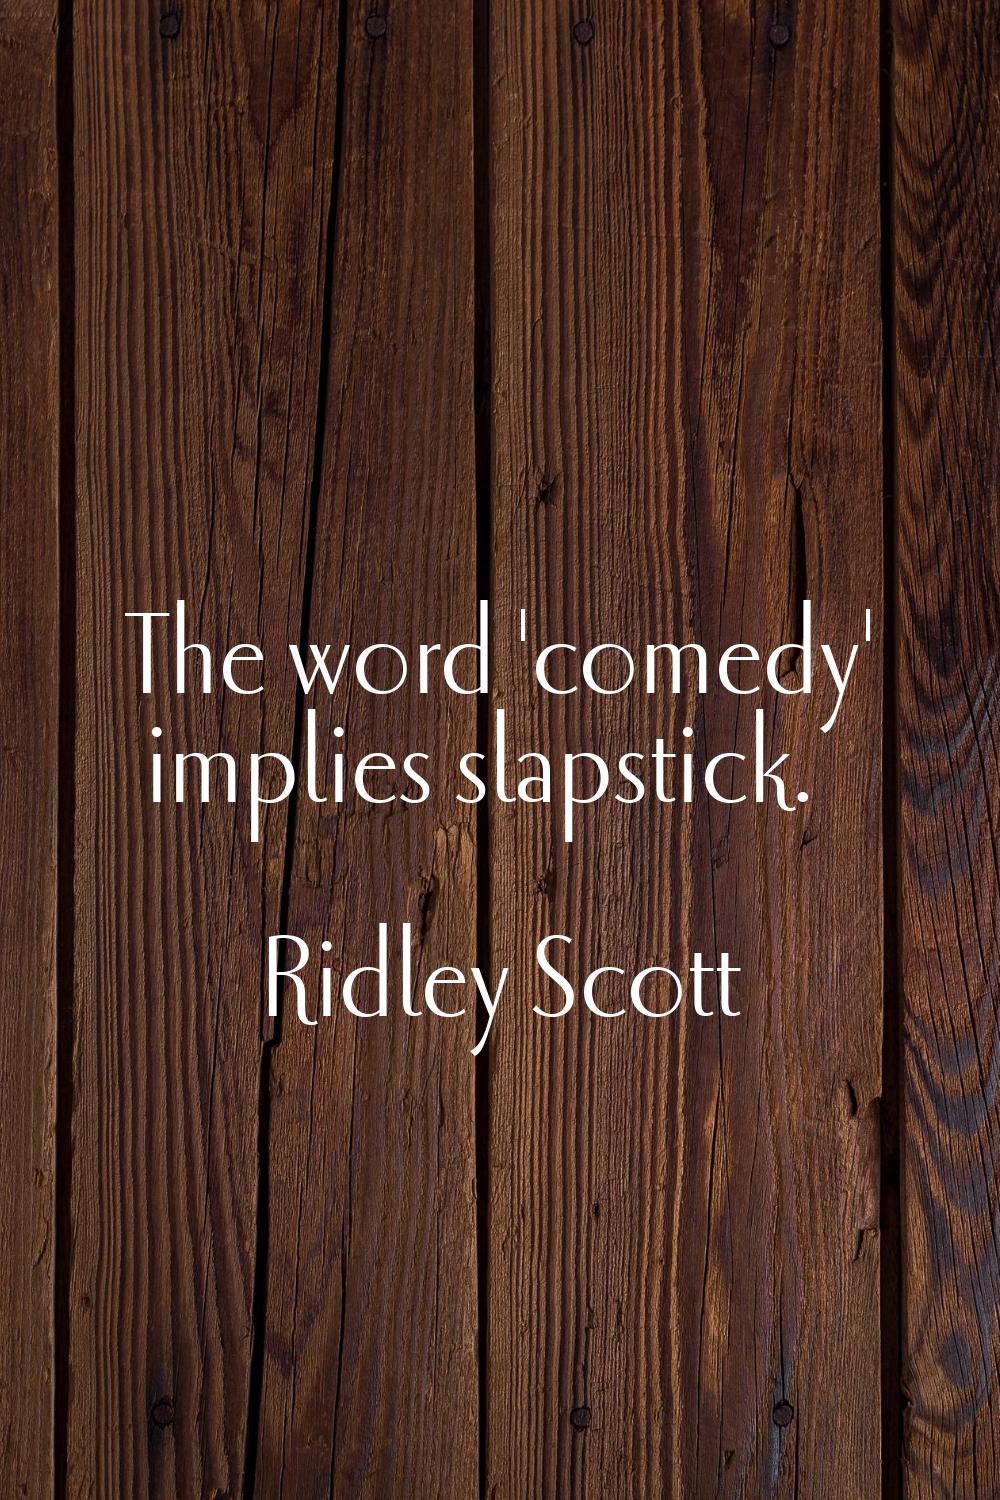 The word 'comedy' implies slapstick.